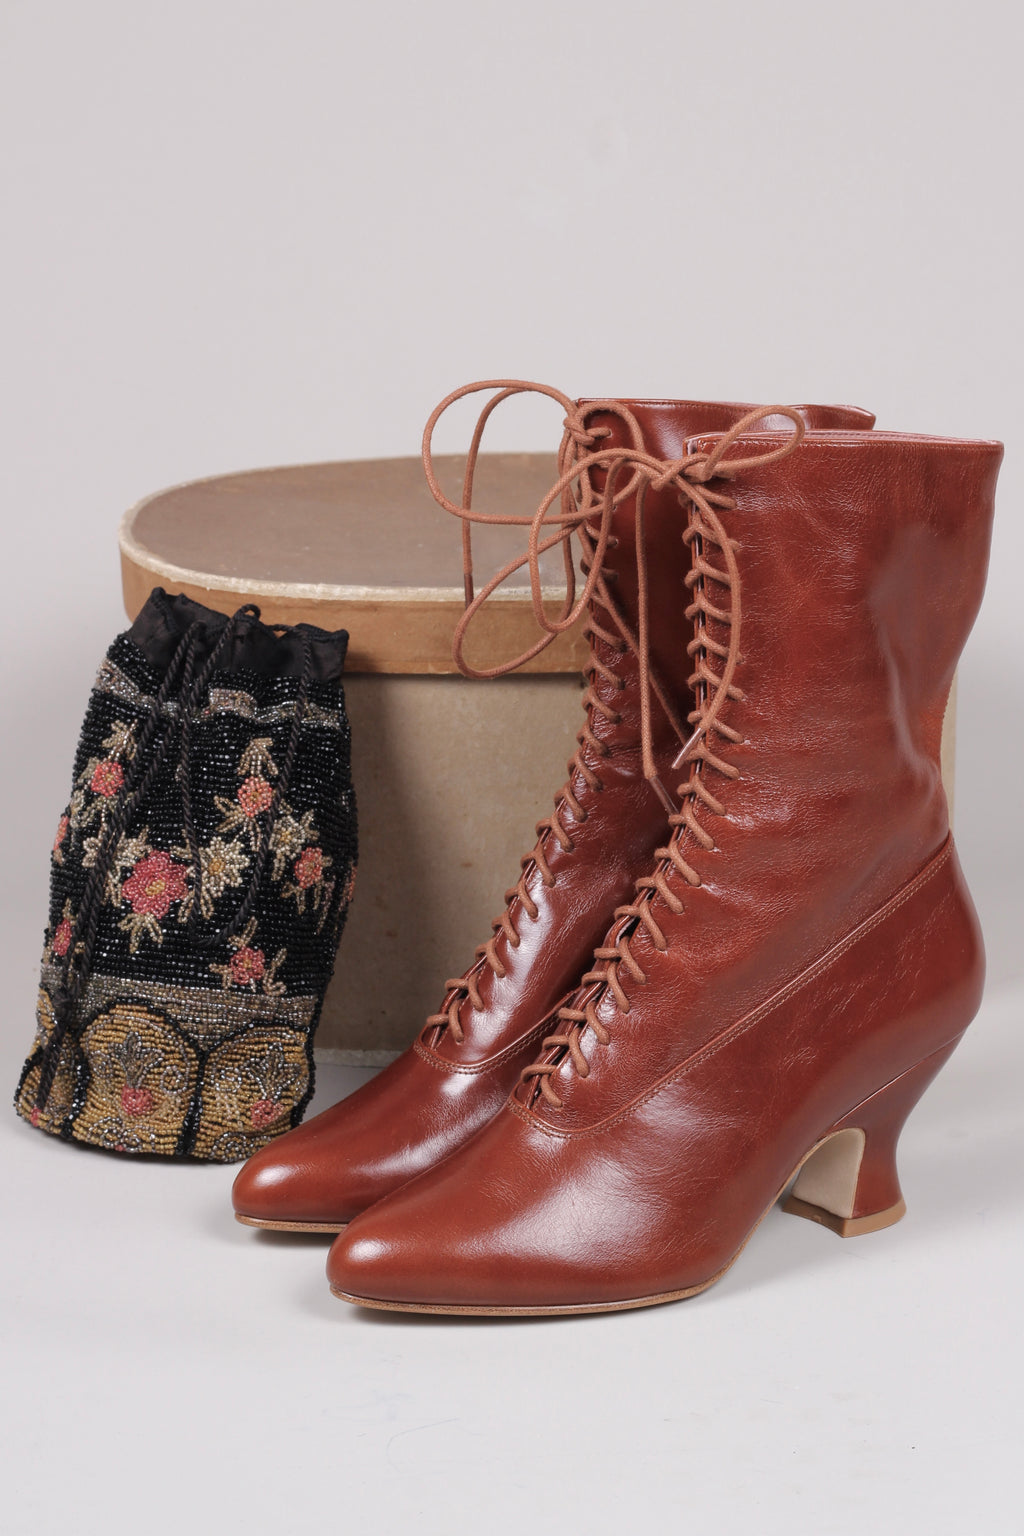 Garneau Women's Monte Rosa Shoe Size EU 38 (064361)